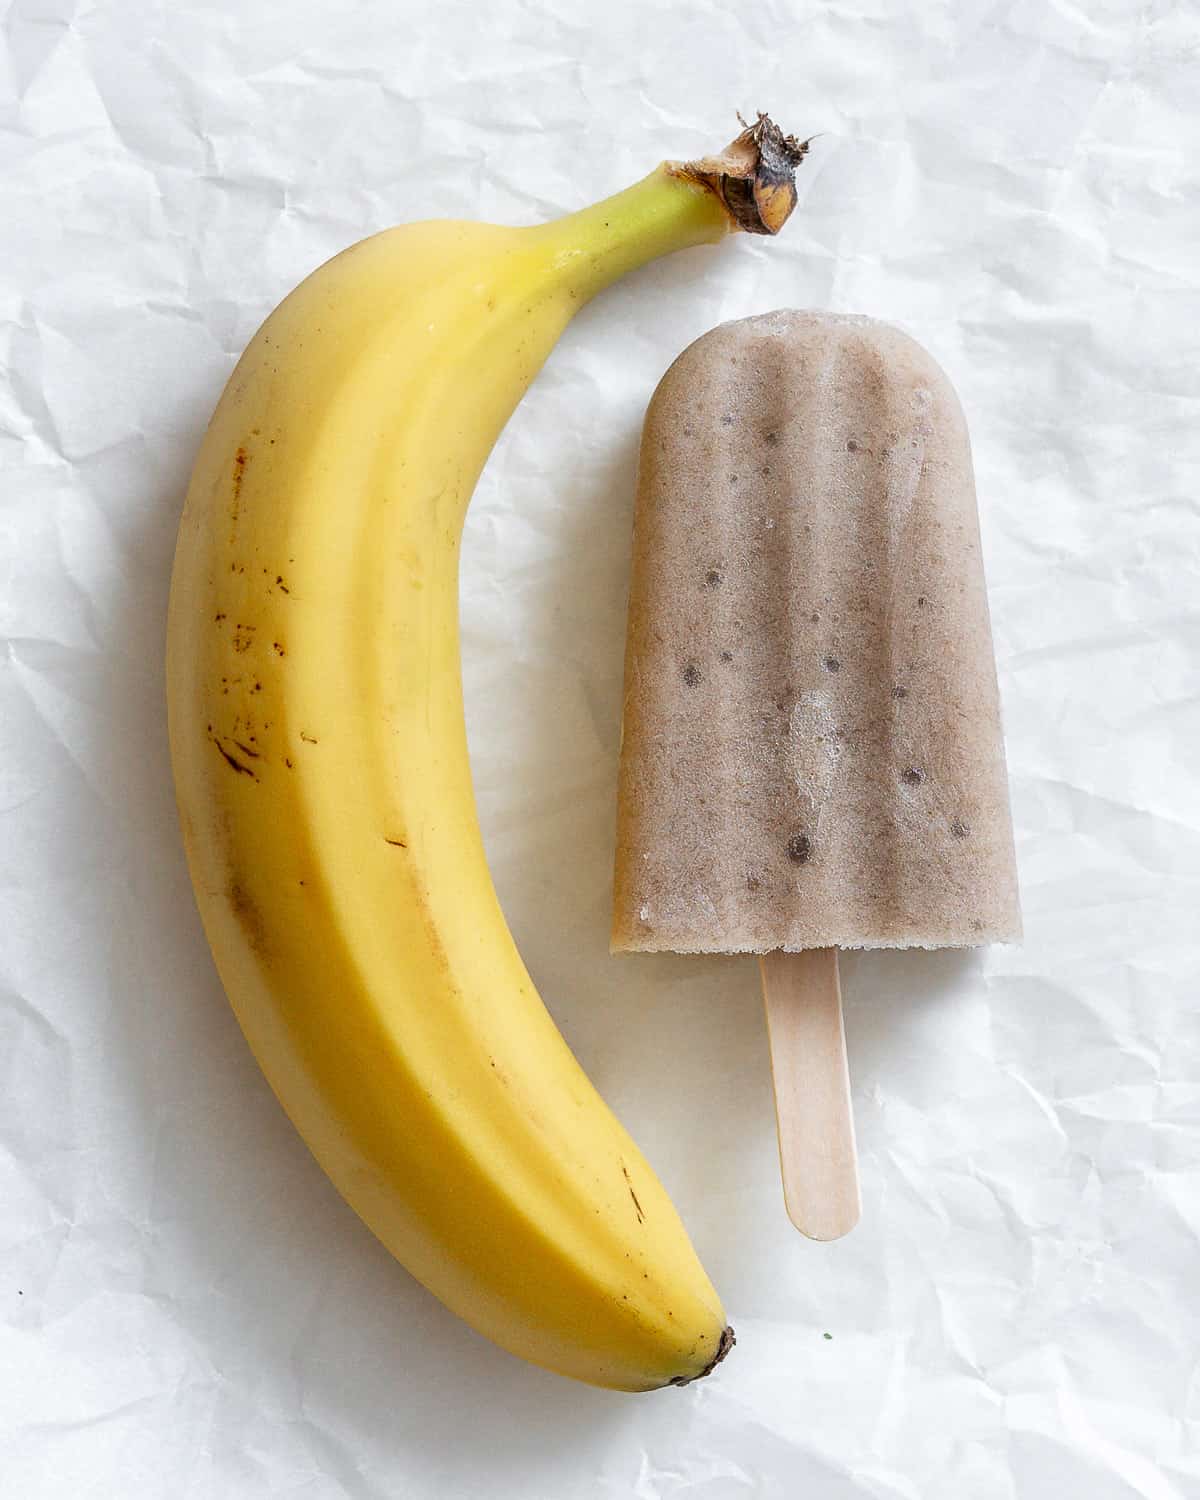 banana and banana popsicle on a white surface